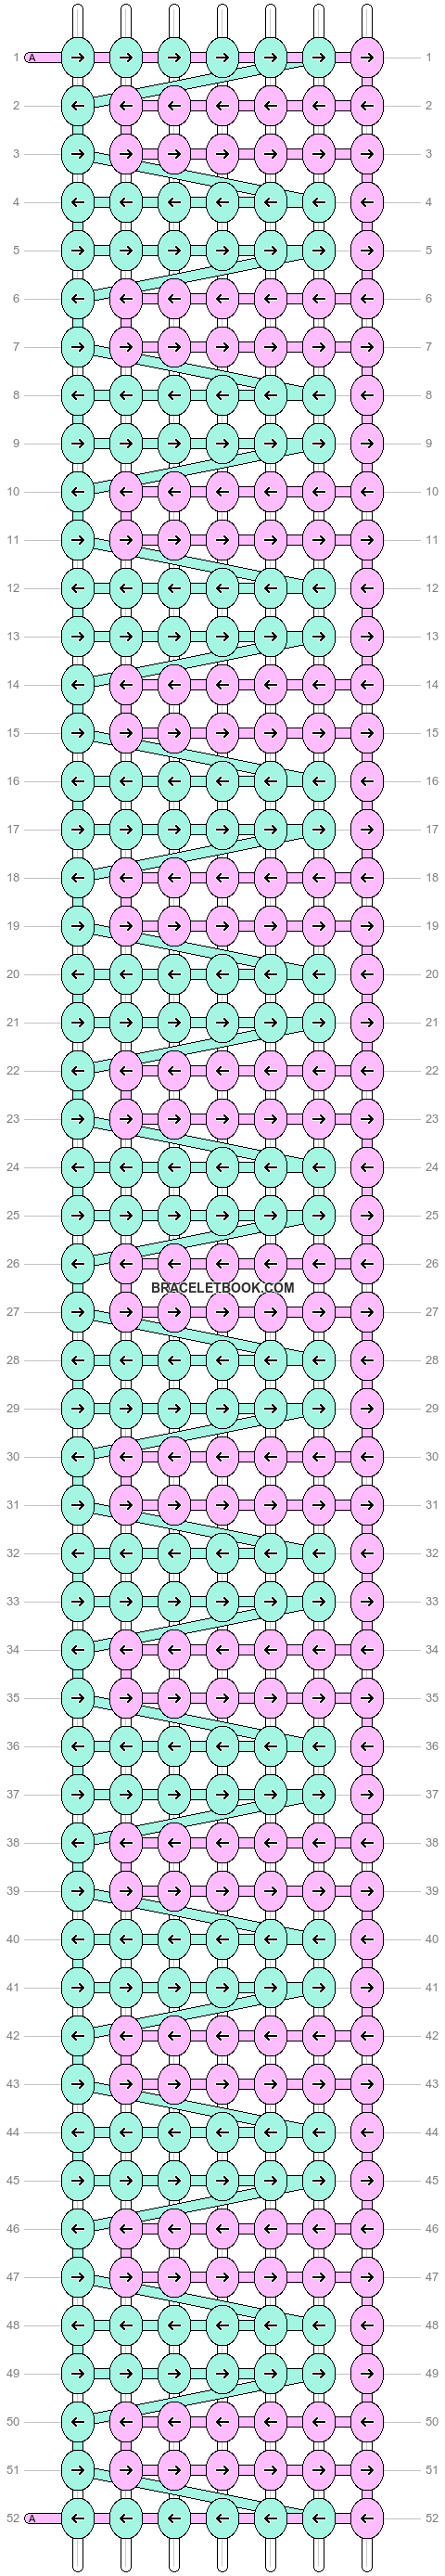 Alpha pattern #15234 variation #39144 pattern